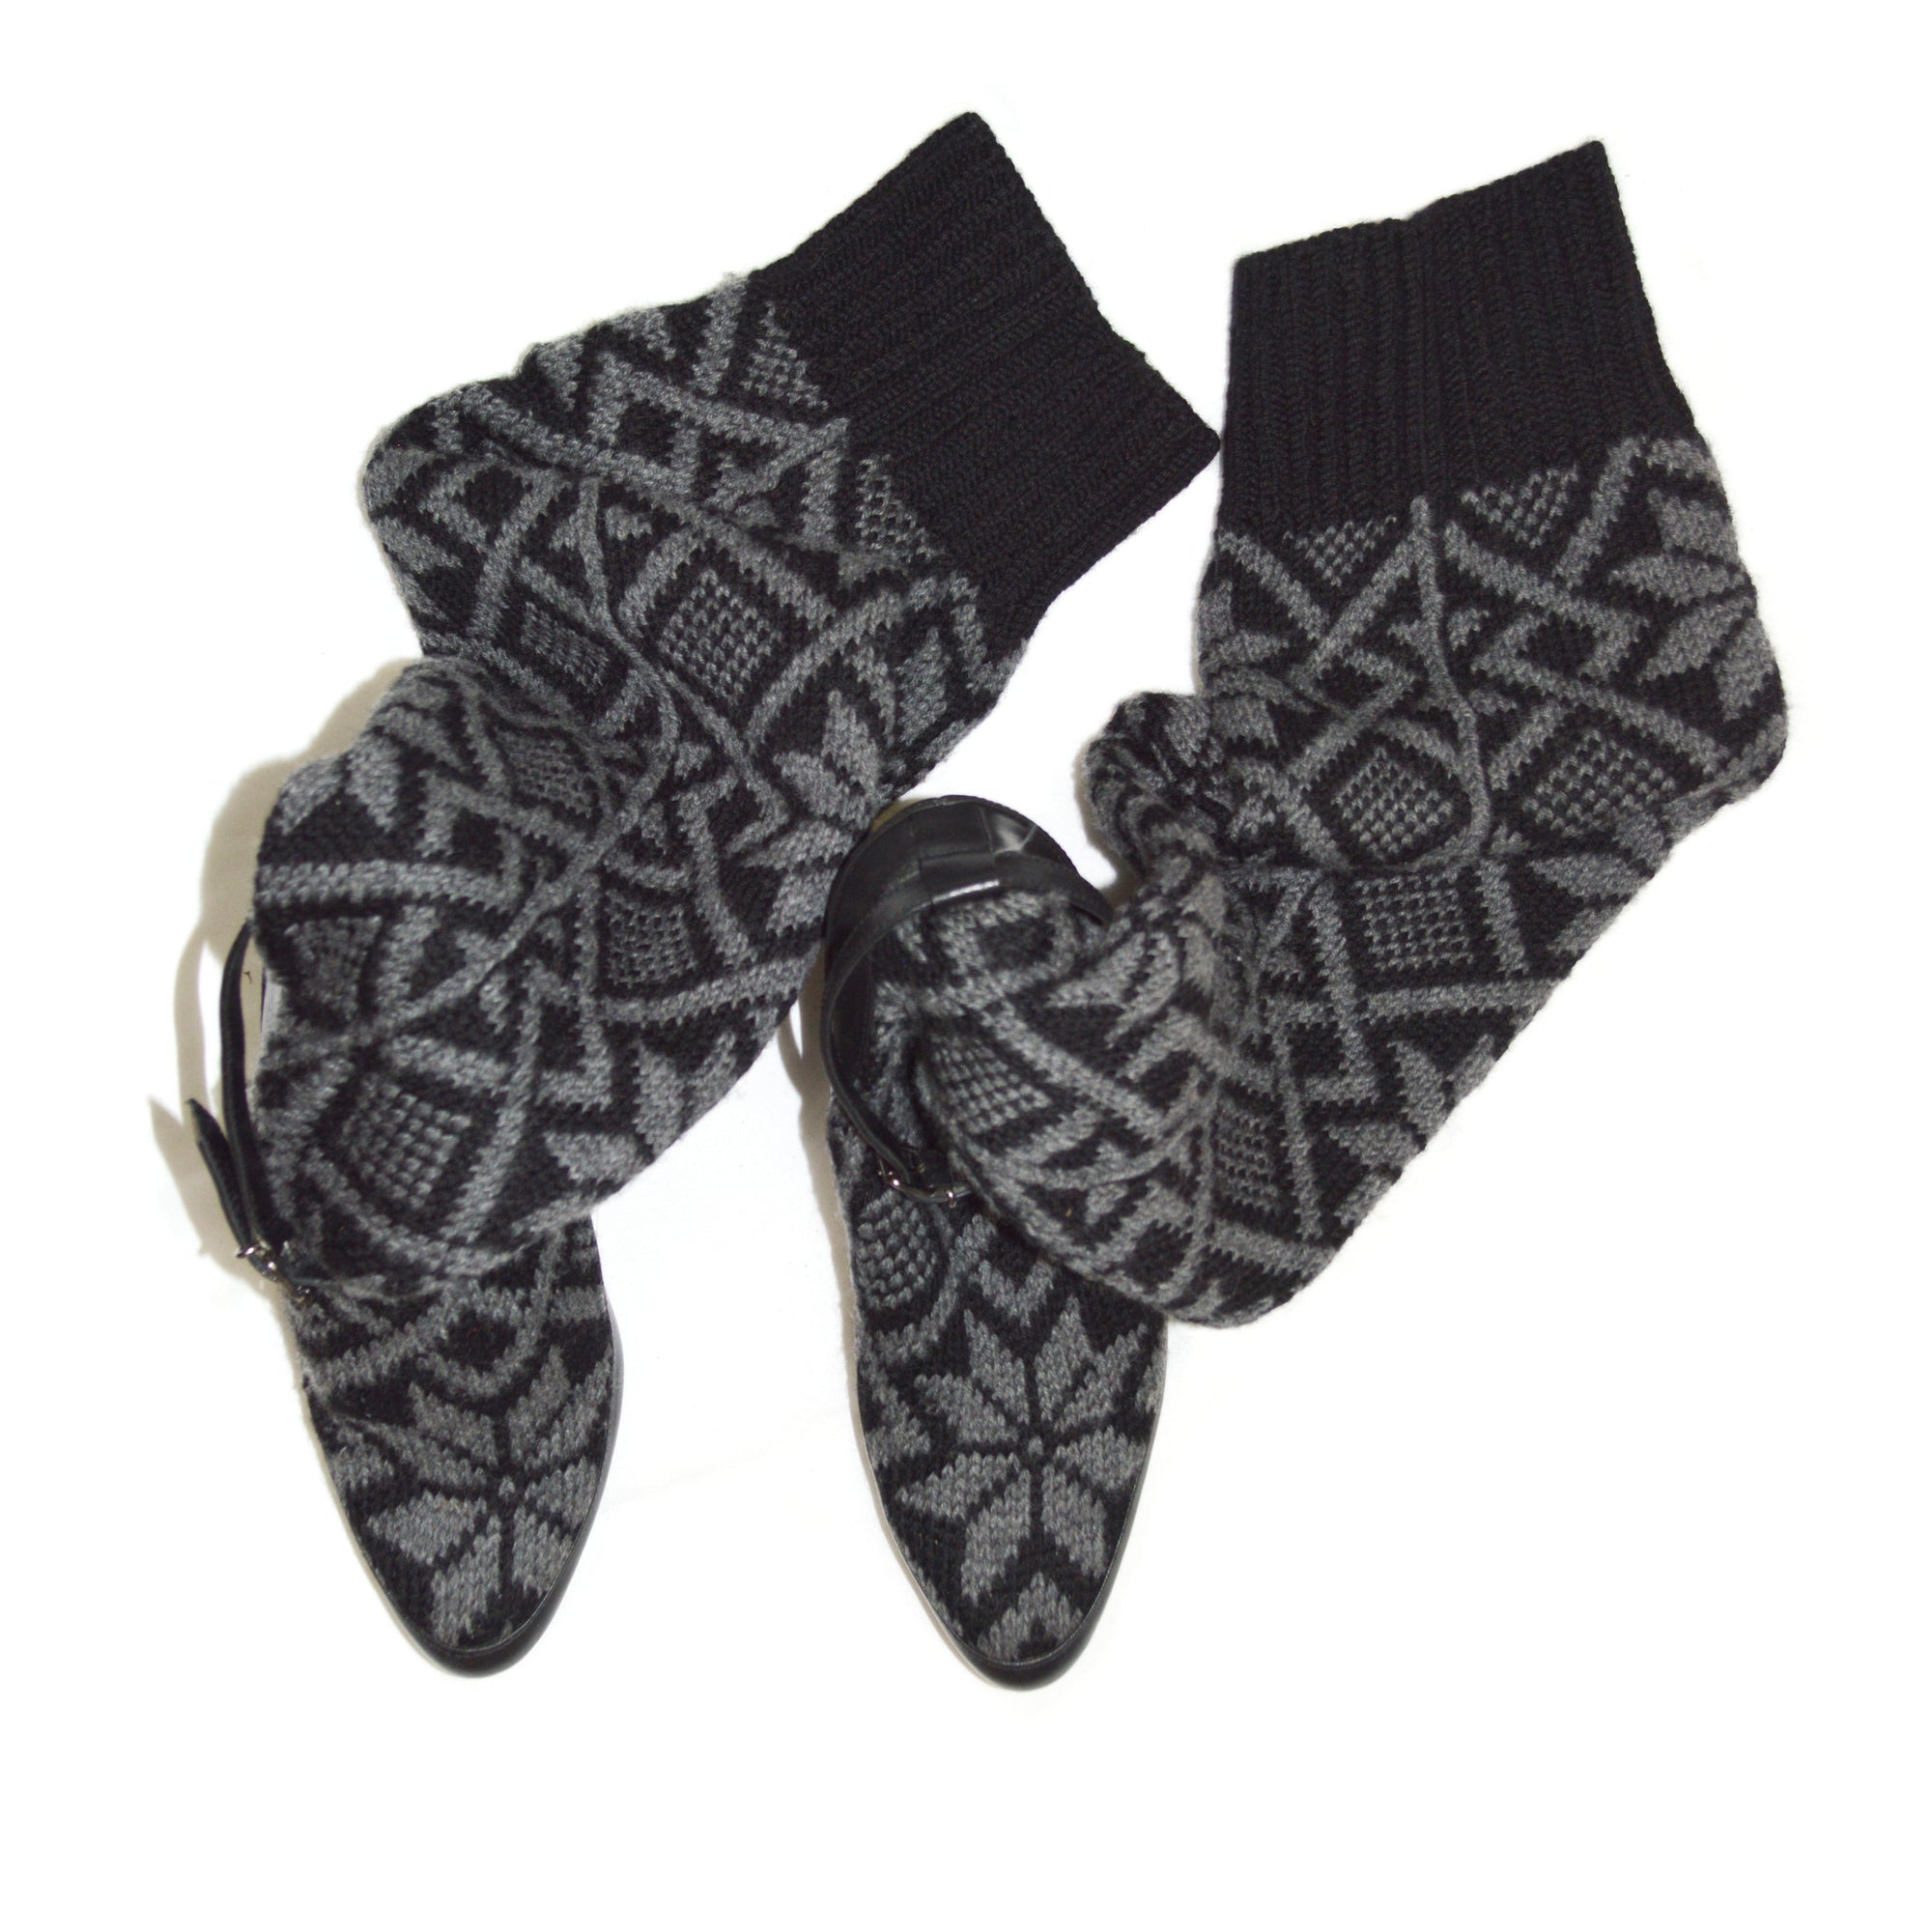 Veronique Branquinho FW 2006 Printed Knit Boots